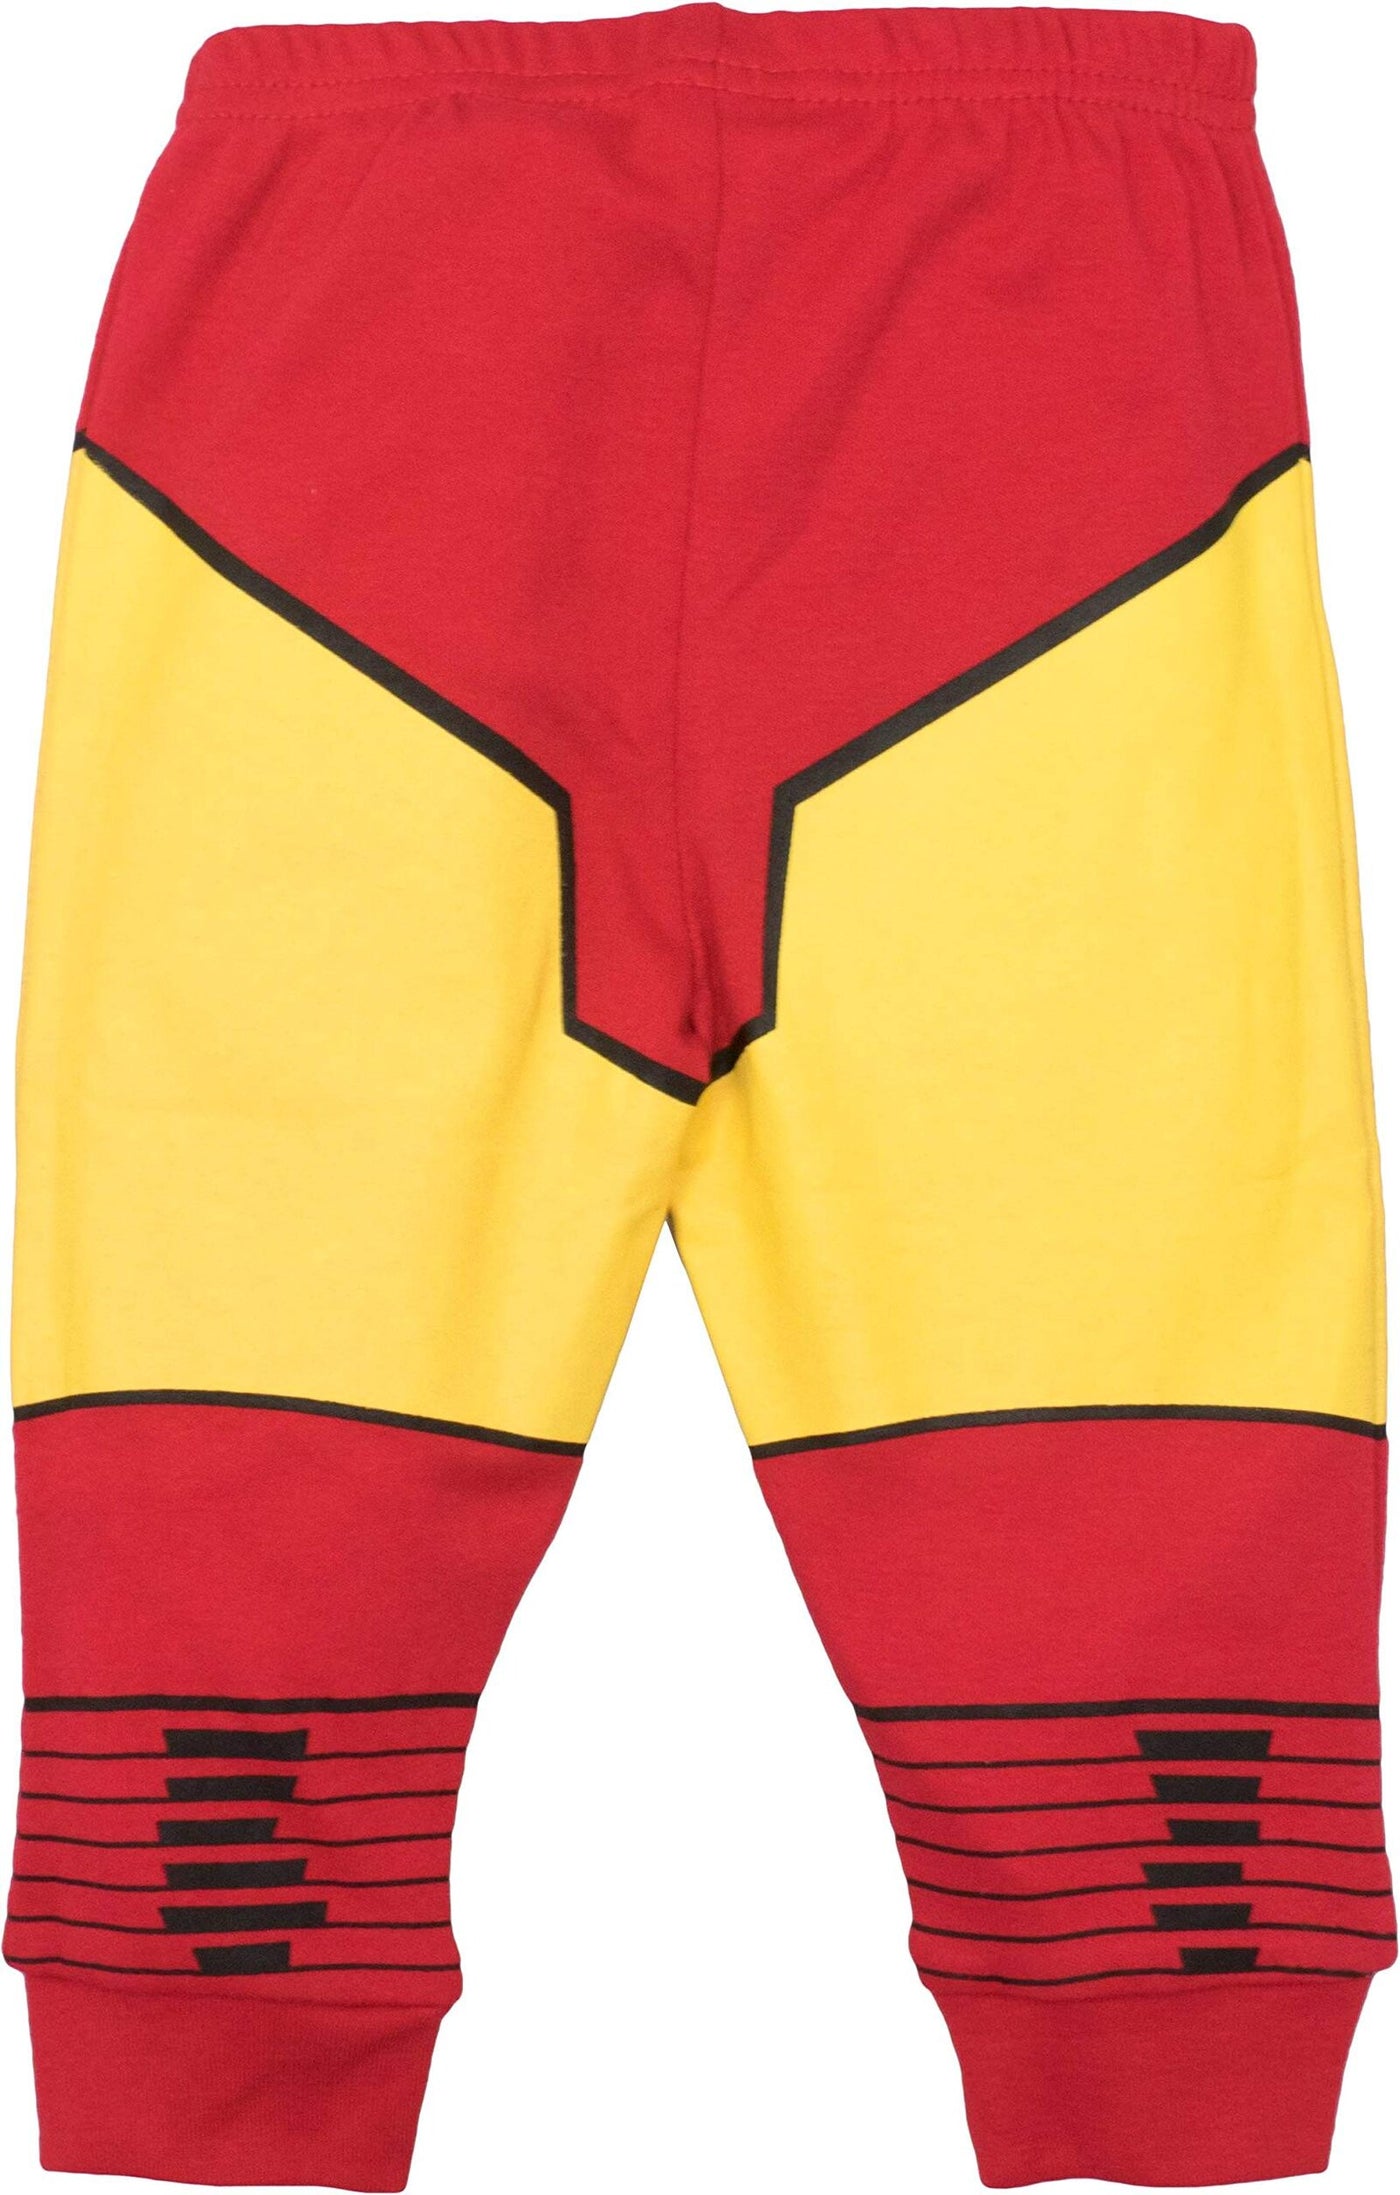 Marvel Avengers Iron Man Cosplay Bodysuit and Pants Set